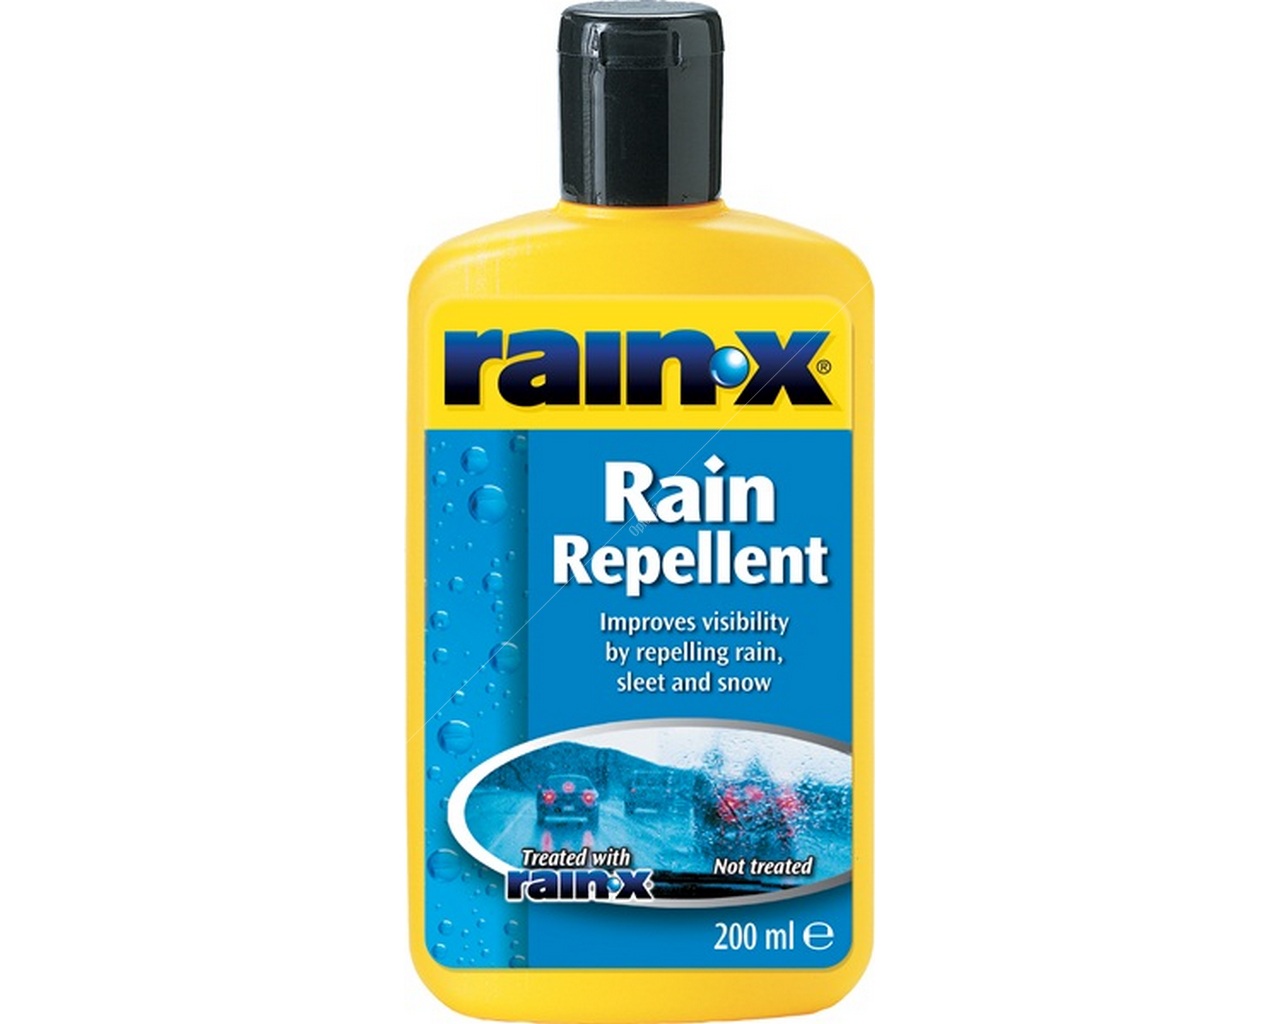 Rain x Rain Repellent -200ml